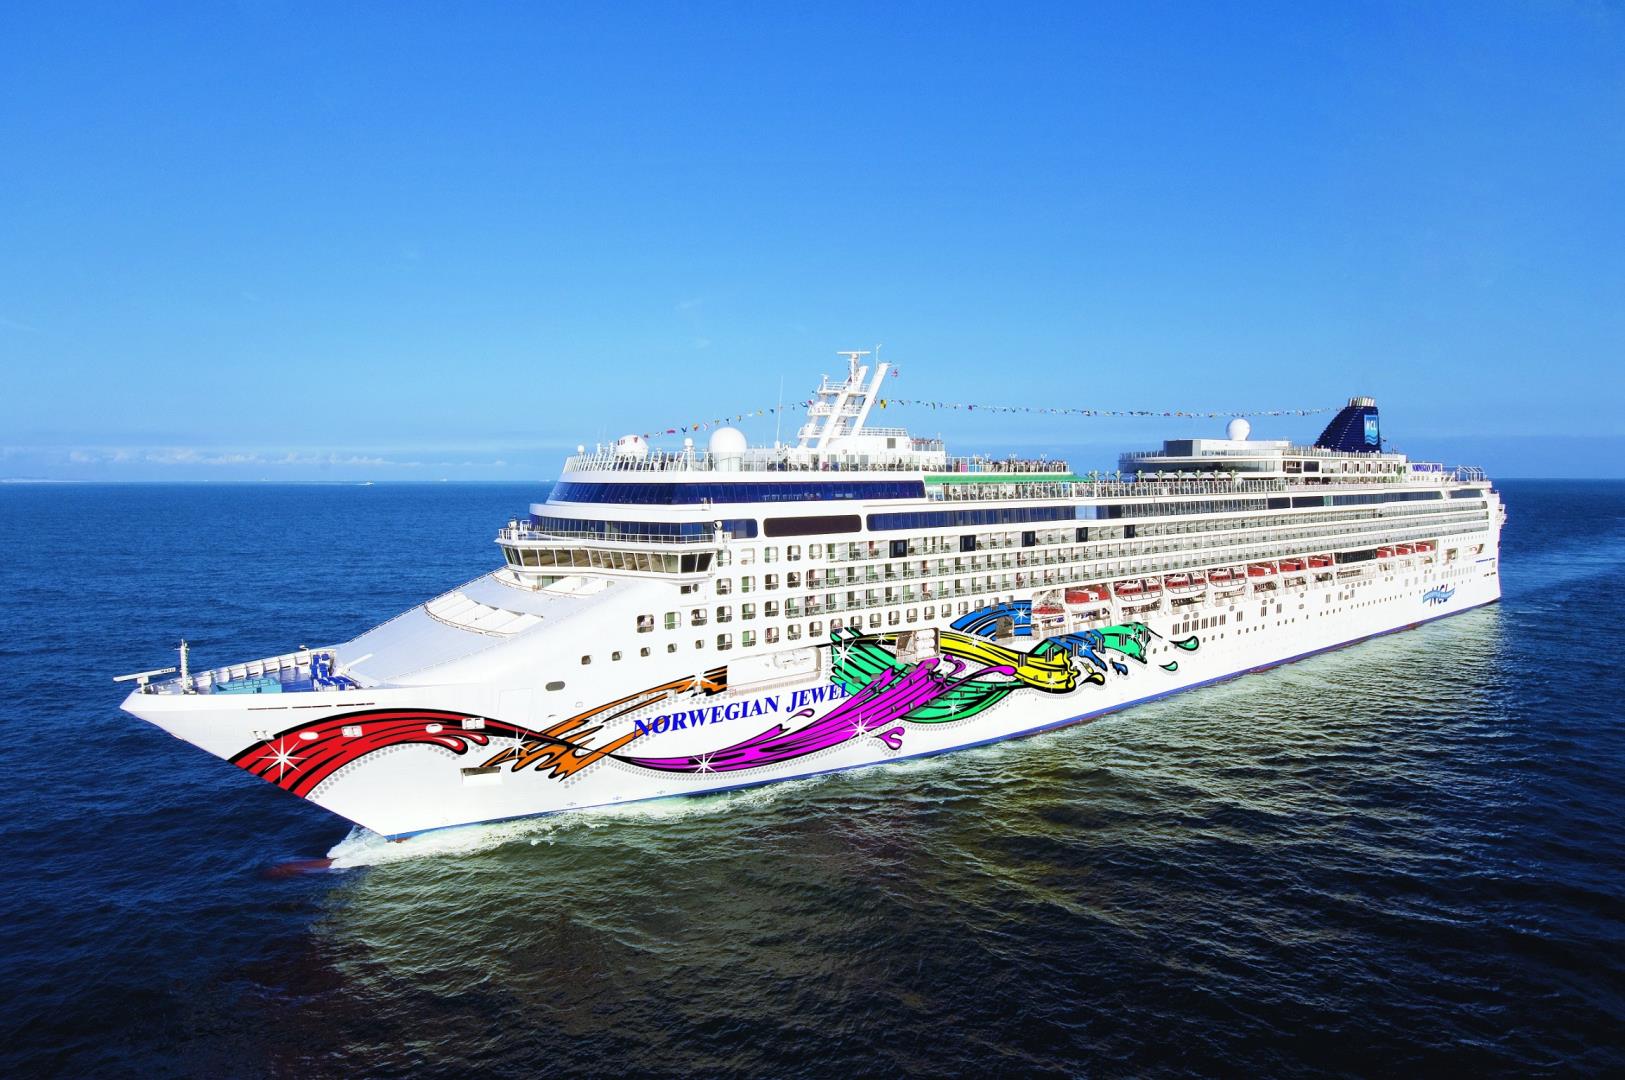 11-day Cruise to Caribbean: Curacao, Aruba & Dominican Republic from Tampa, Florida on Norwegian Jewel